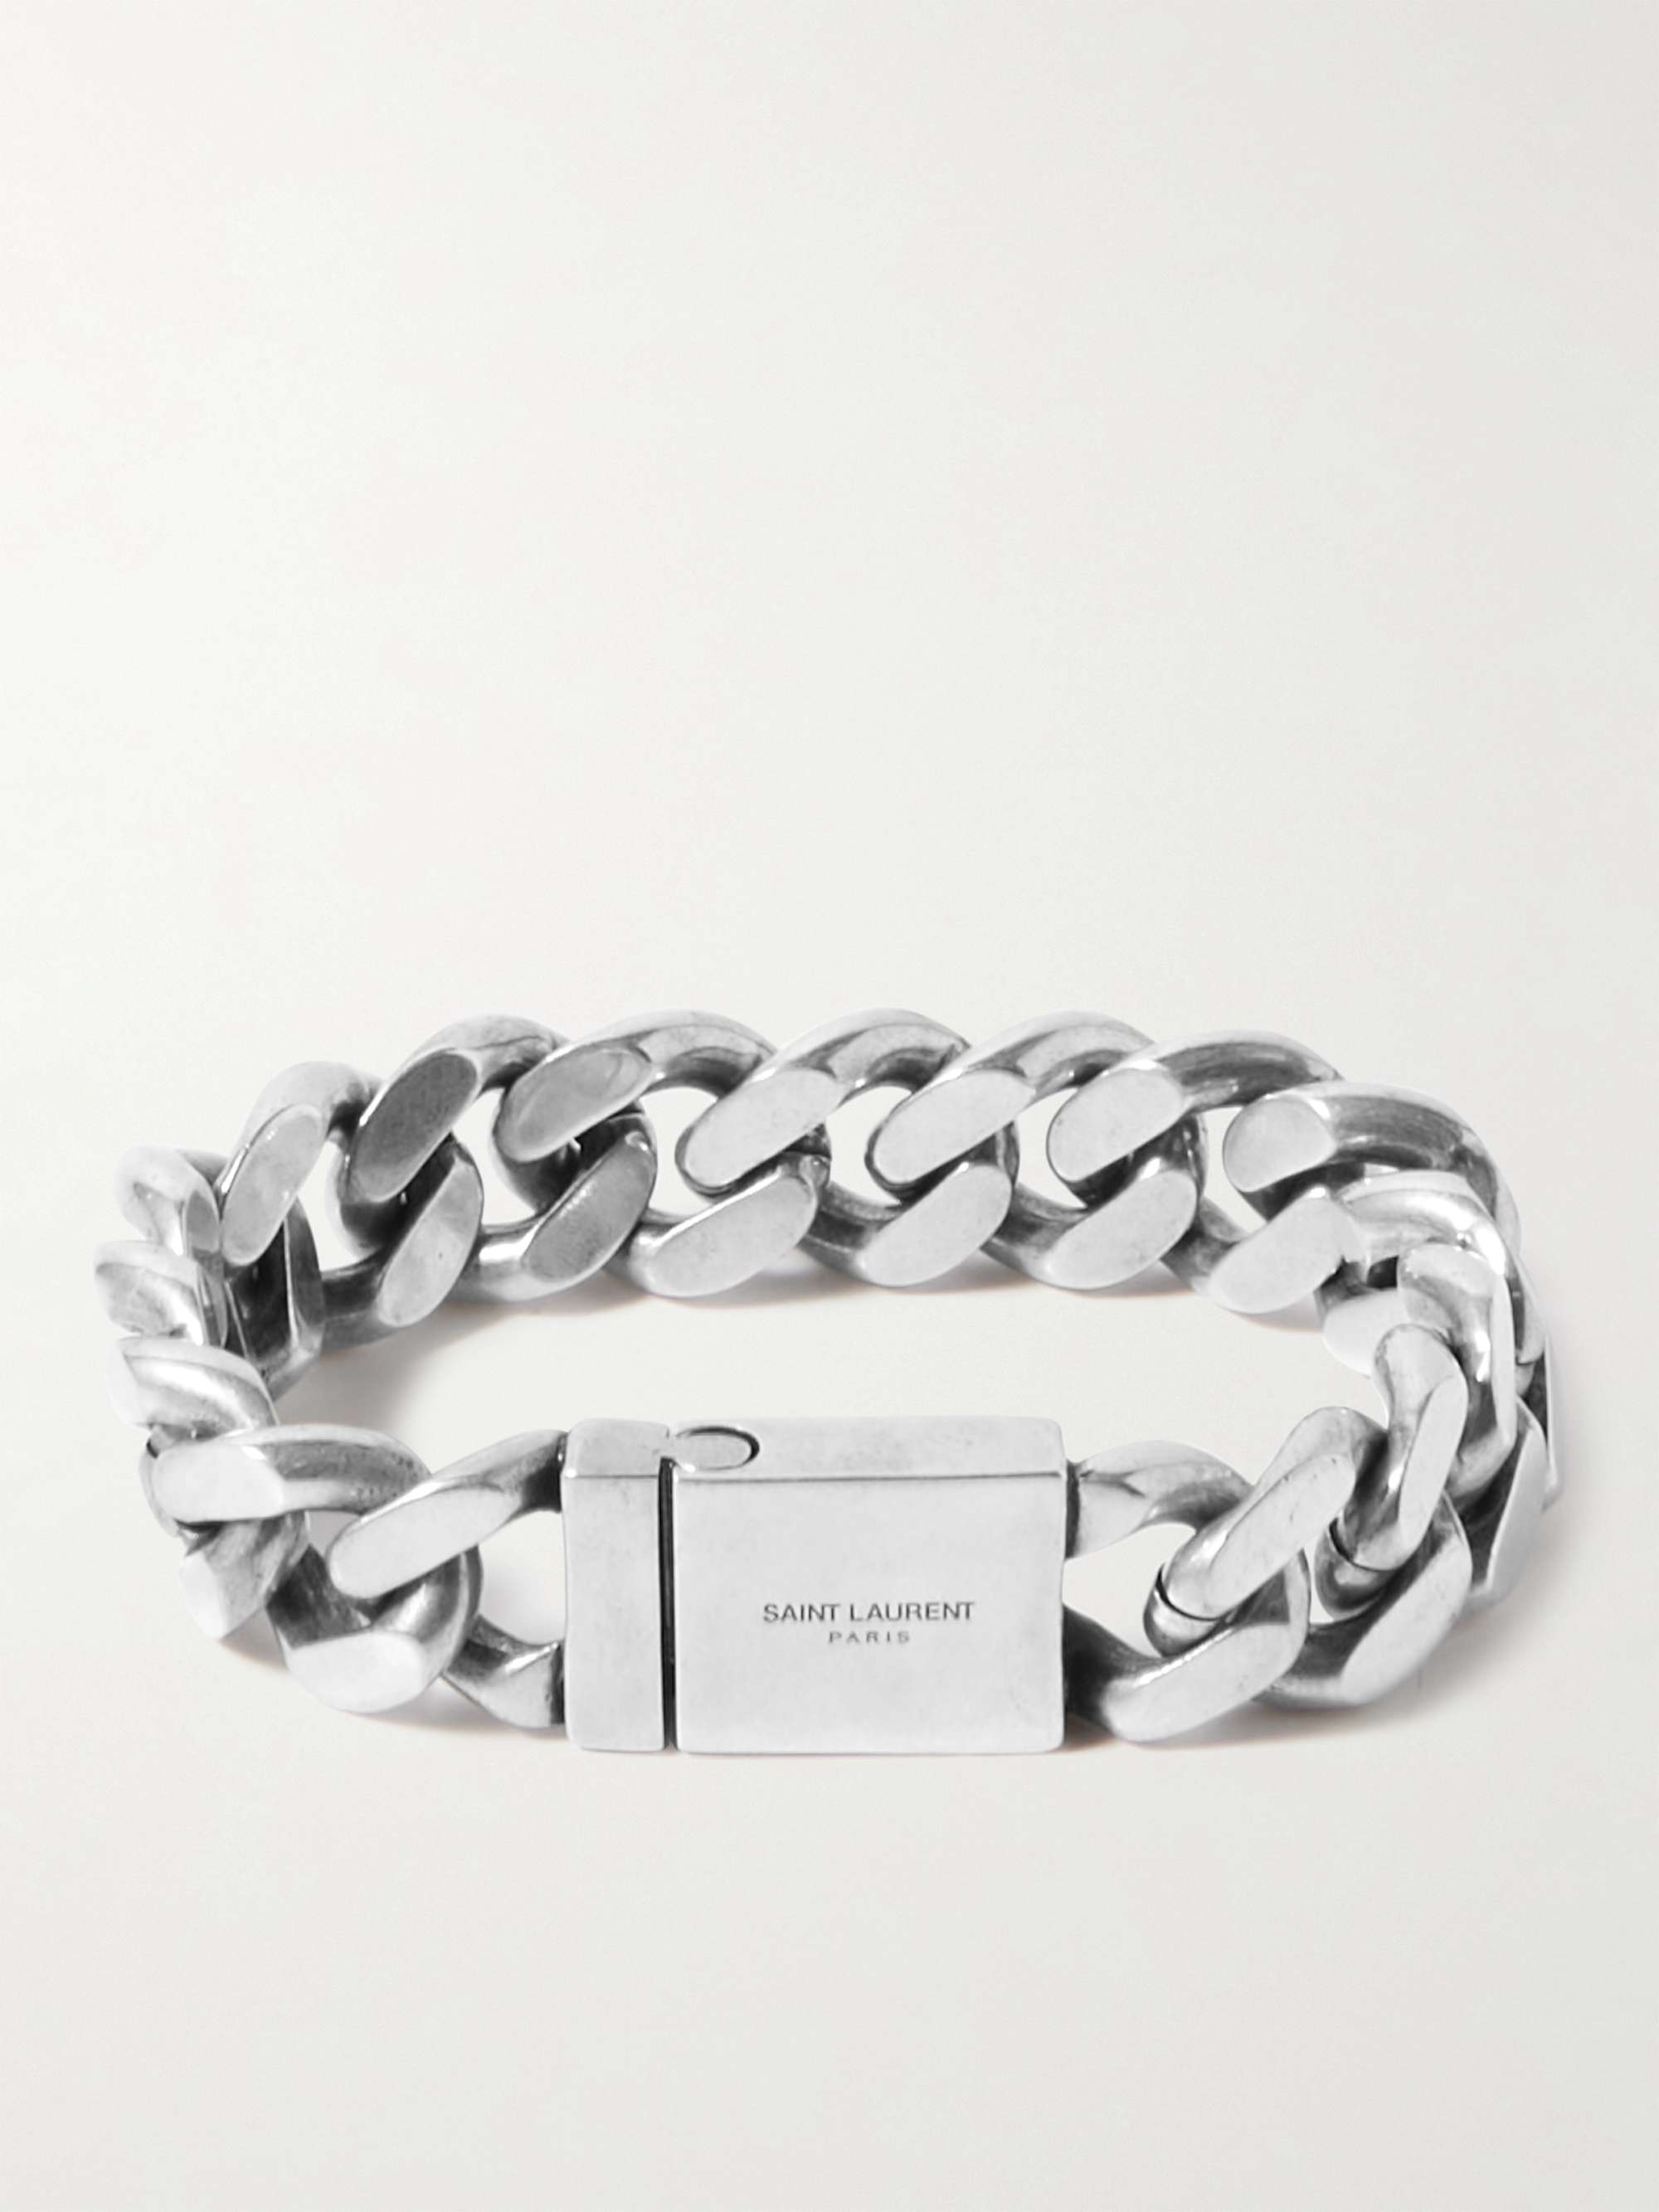 Silver-Tone Chain Bracelet